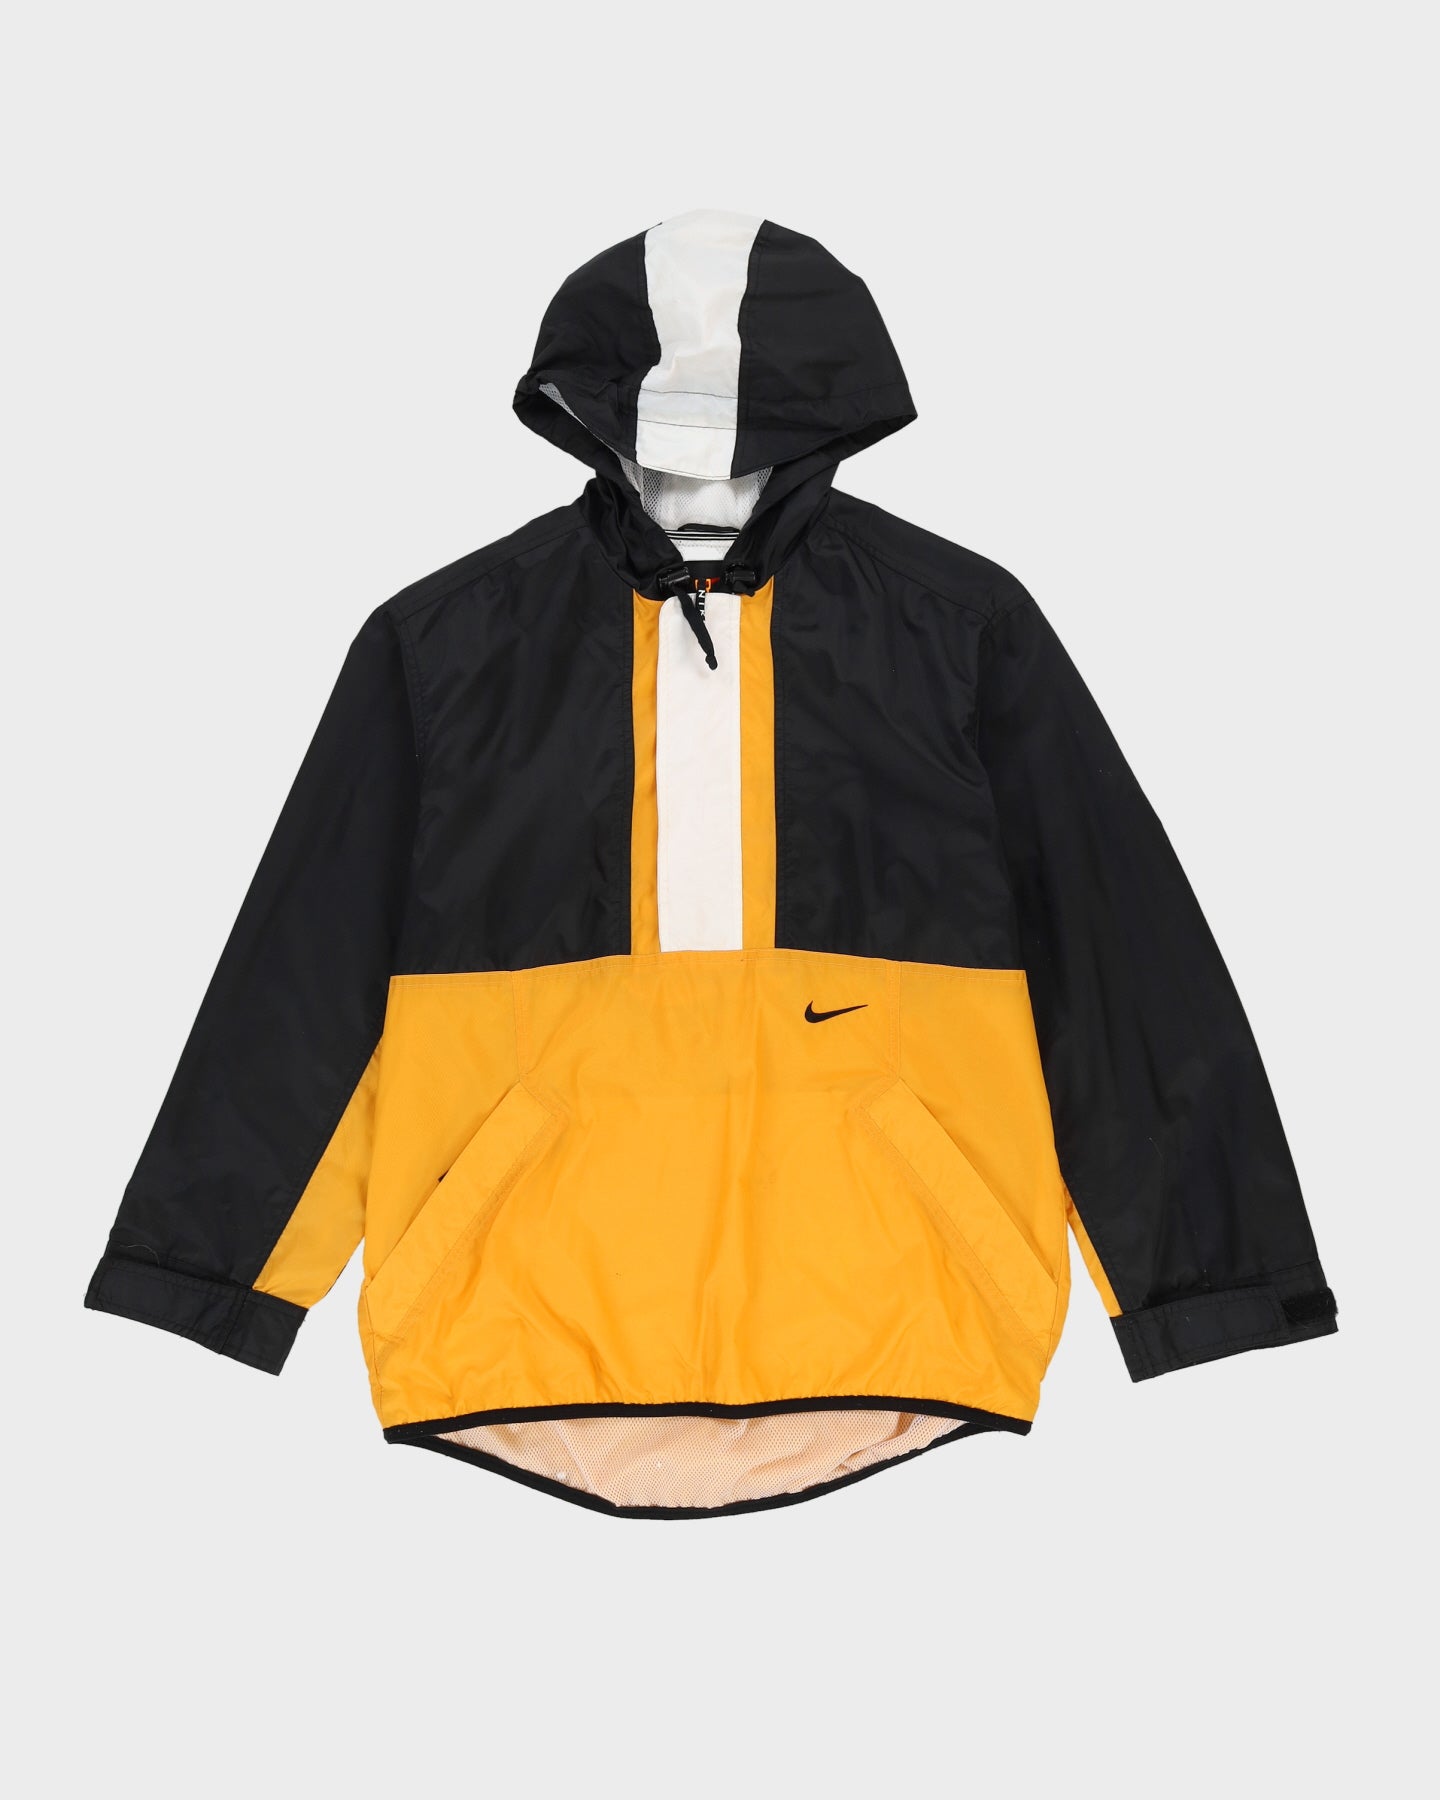 Vintage 90s Nike Yellow Hooded  Windbreaker Jacket - S